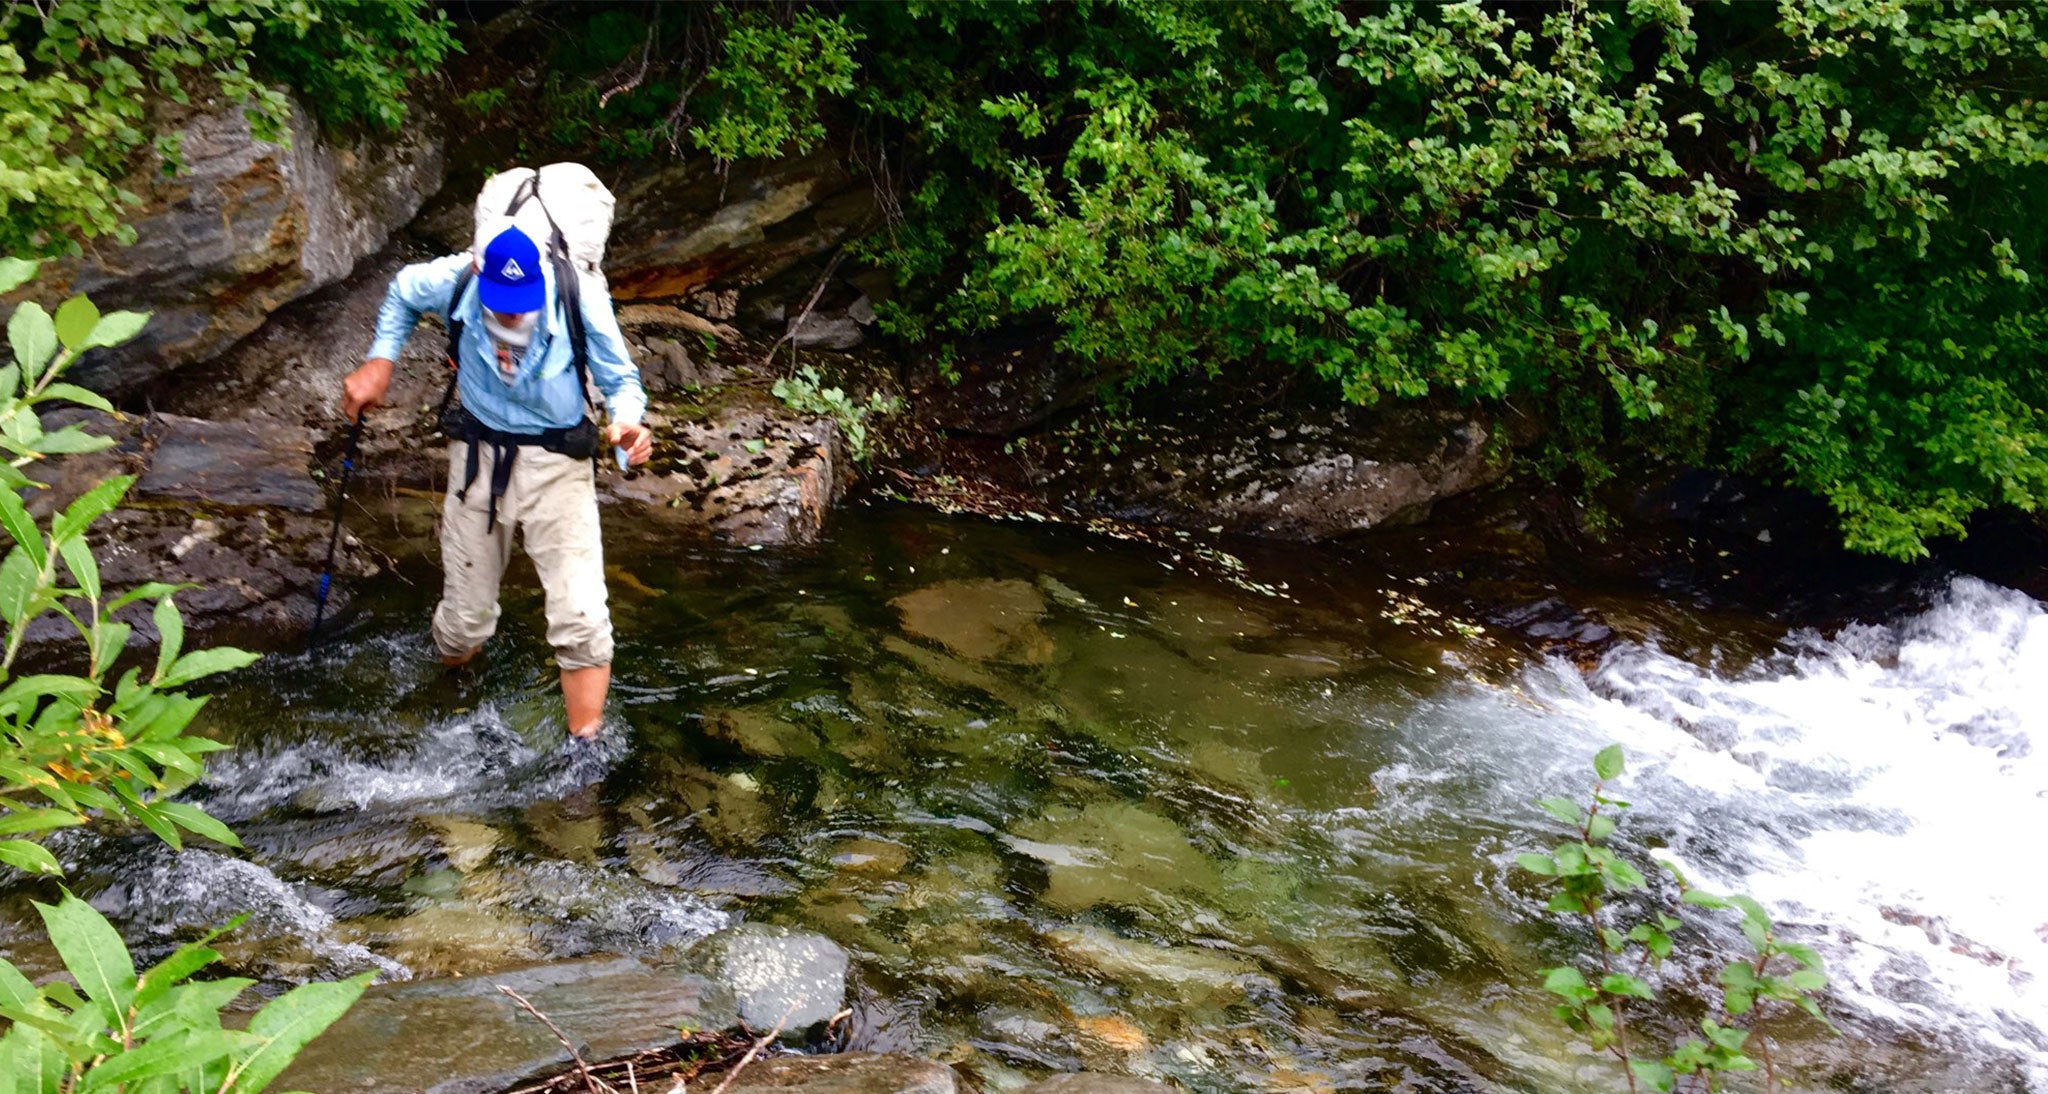 Ultralight backpacker crossing a river by foot